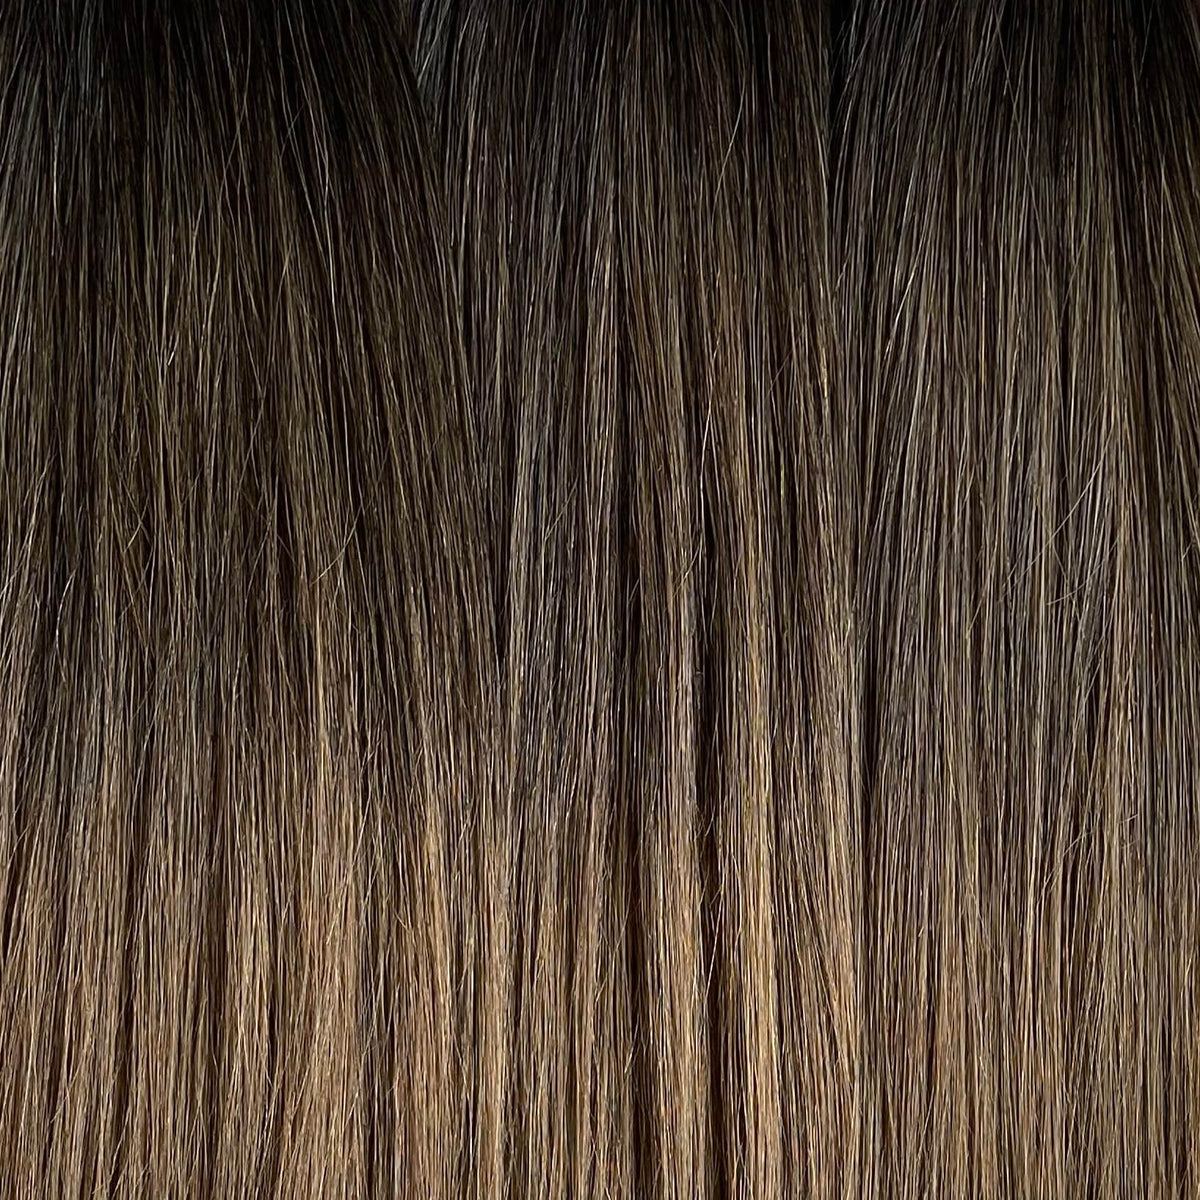 desert bronze luxury line hair extension closeup